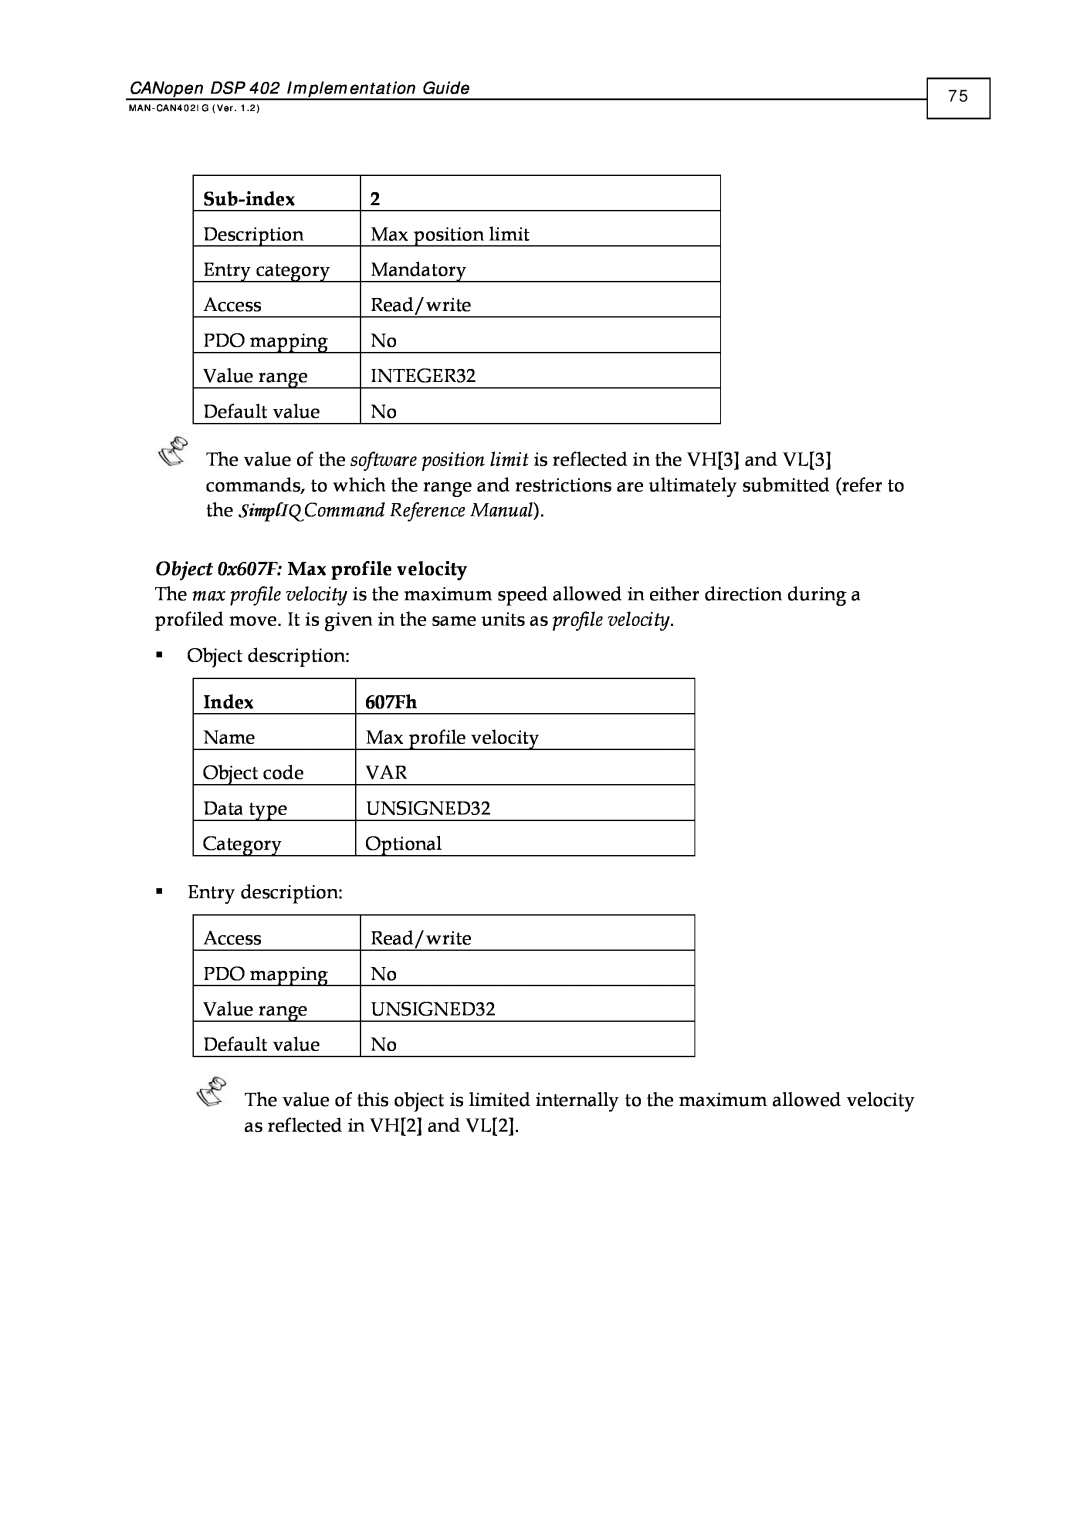 Elmo DSP 402 manual Sub-index, Object 0x607F Max profile velocity, Index, 607Fh 